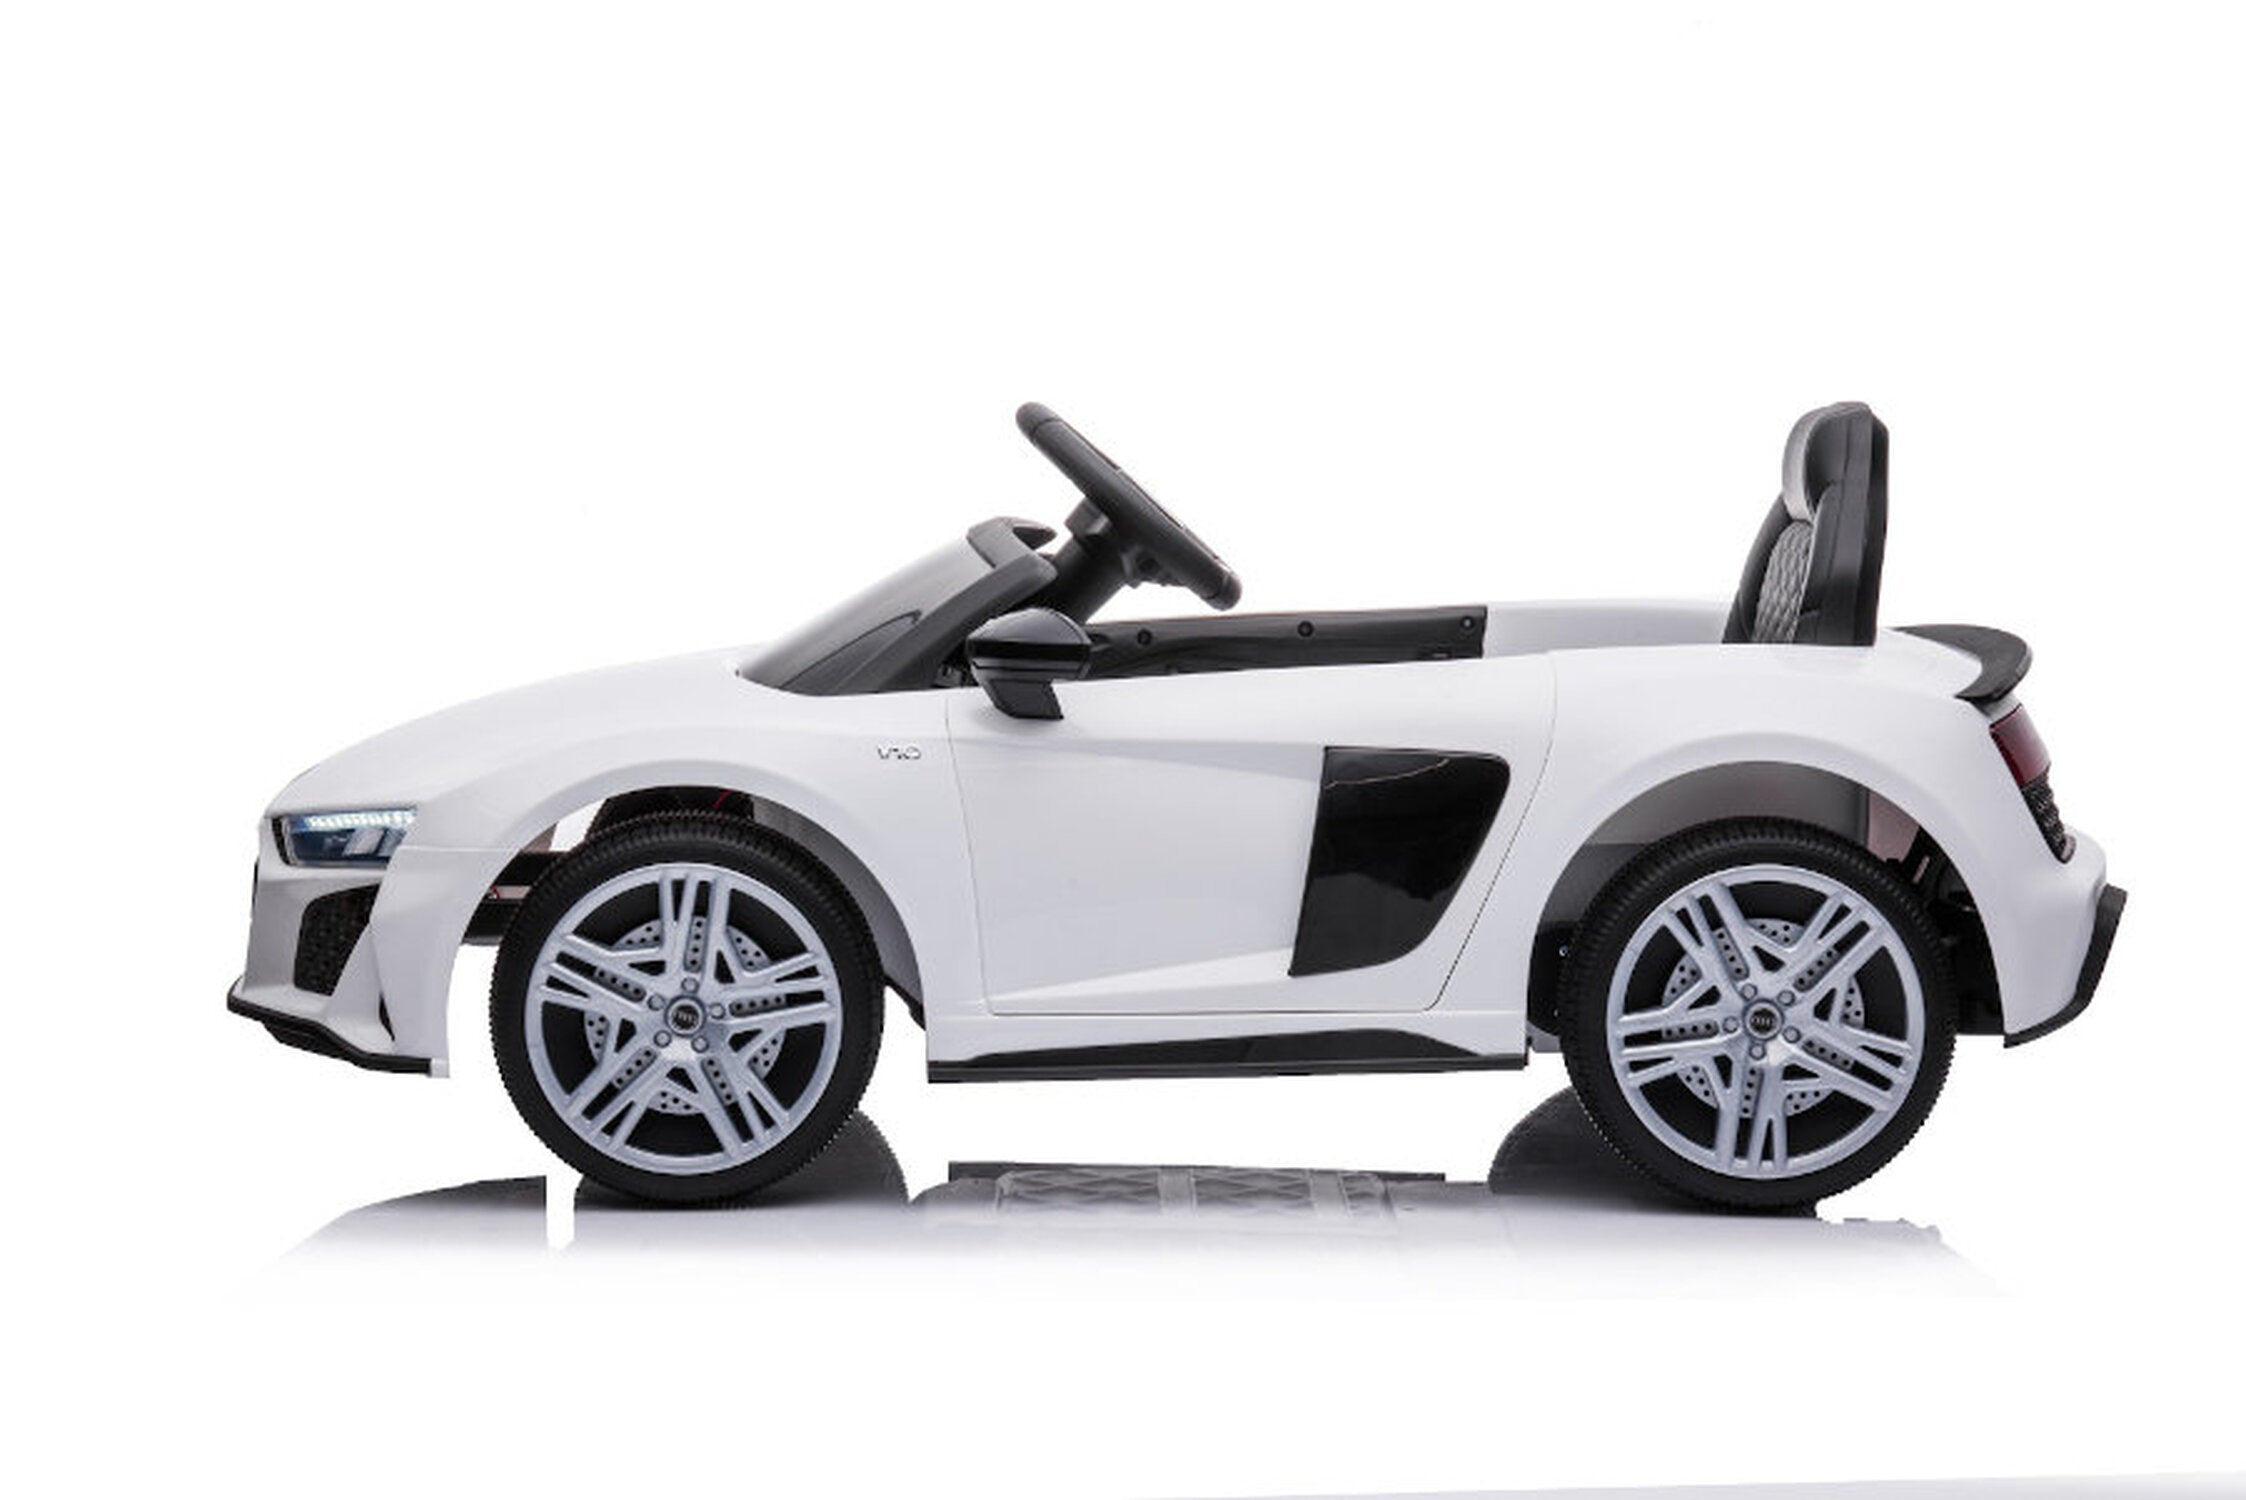 TPFLiving Elektro-Kinderauto Audi R8 Spyder - Kinderauto - Elektroauto - Ledersitz und Sicherheitsgurt